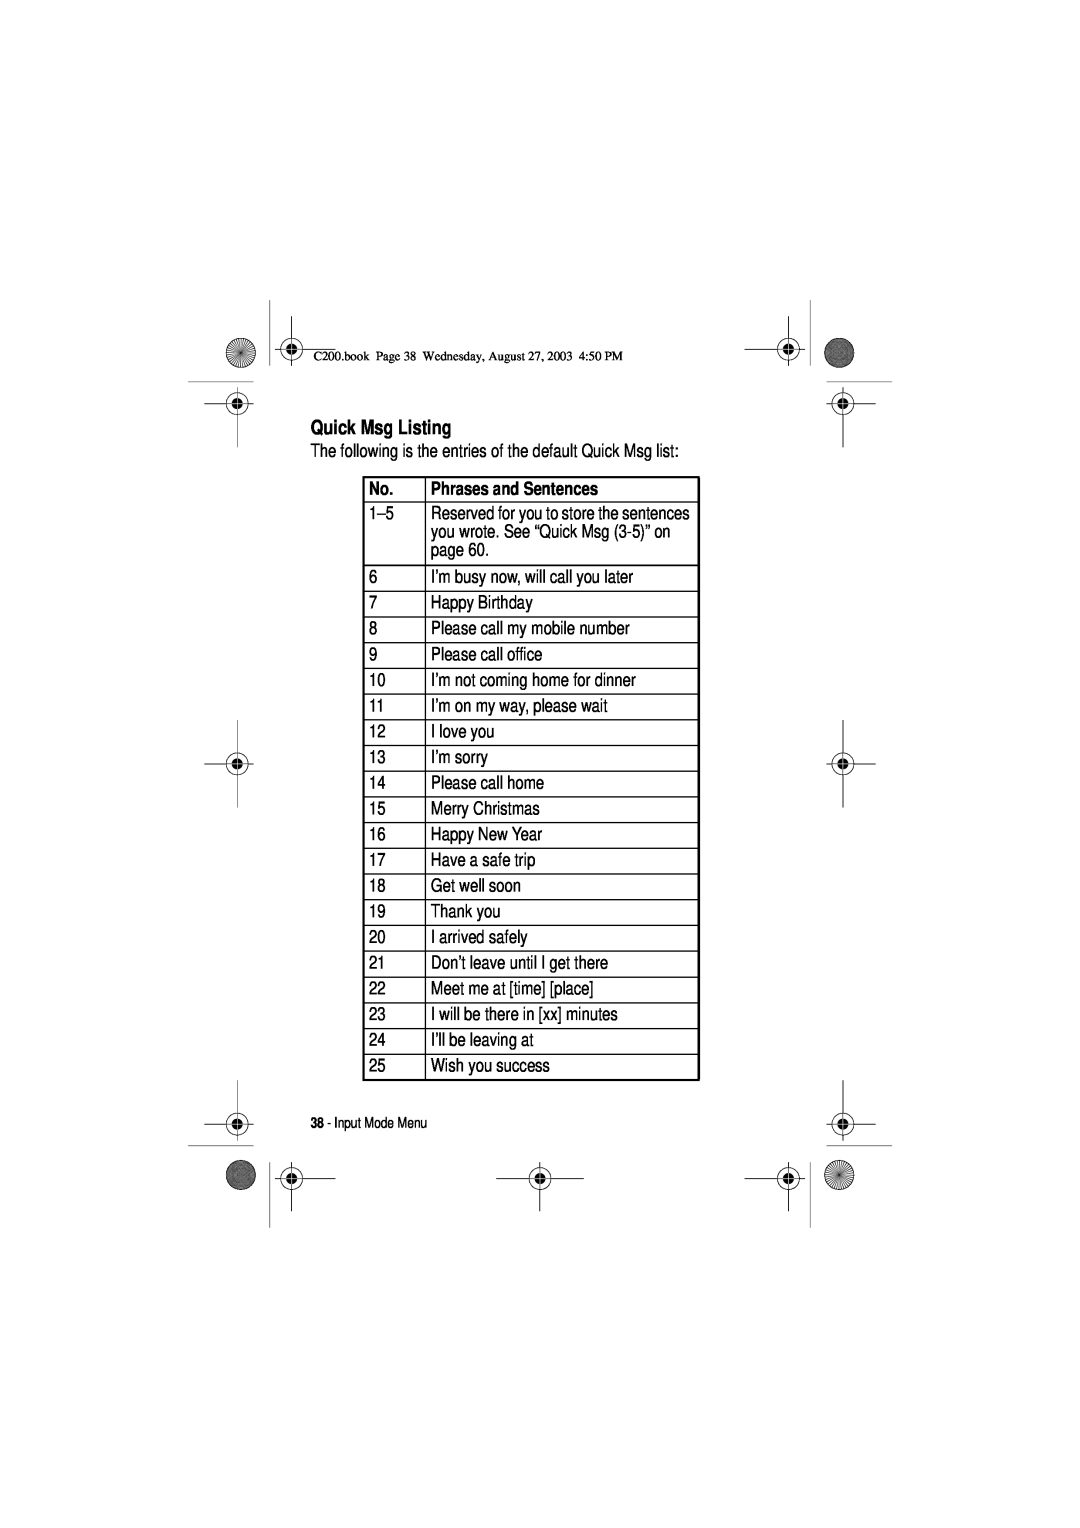 Motorola C200 manual Quick Msg Listing, Phrases and Sentences 